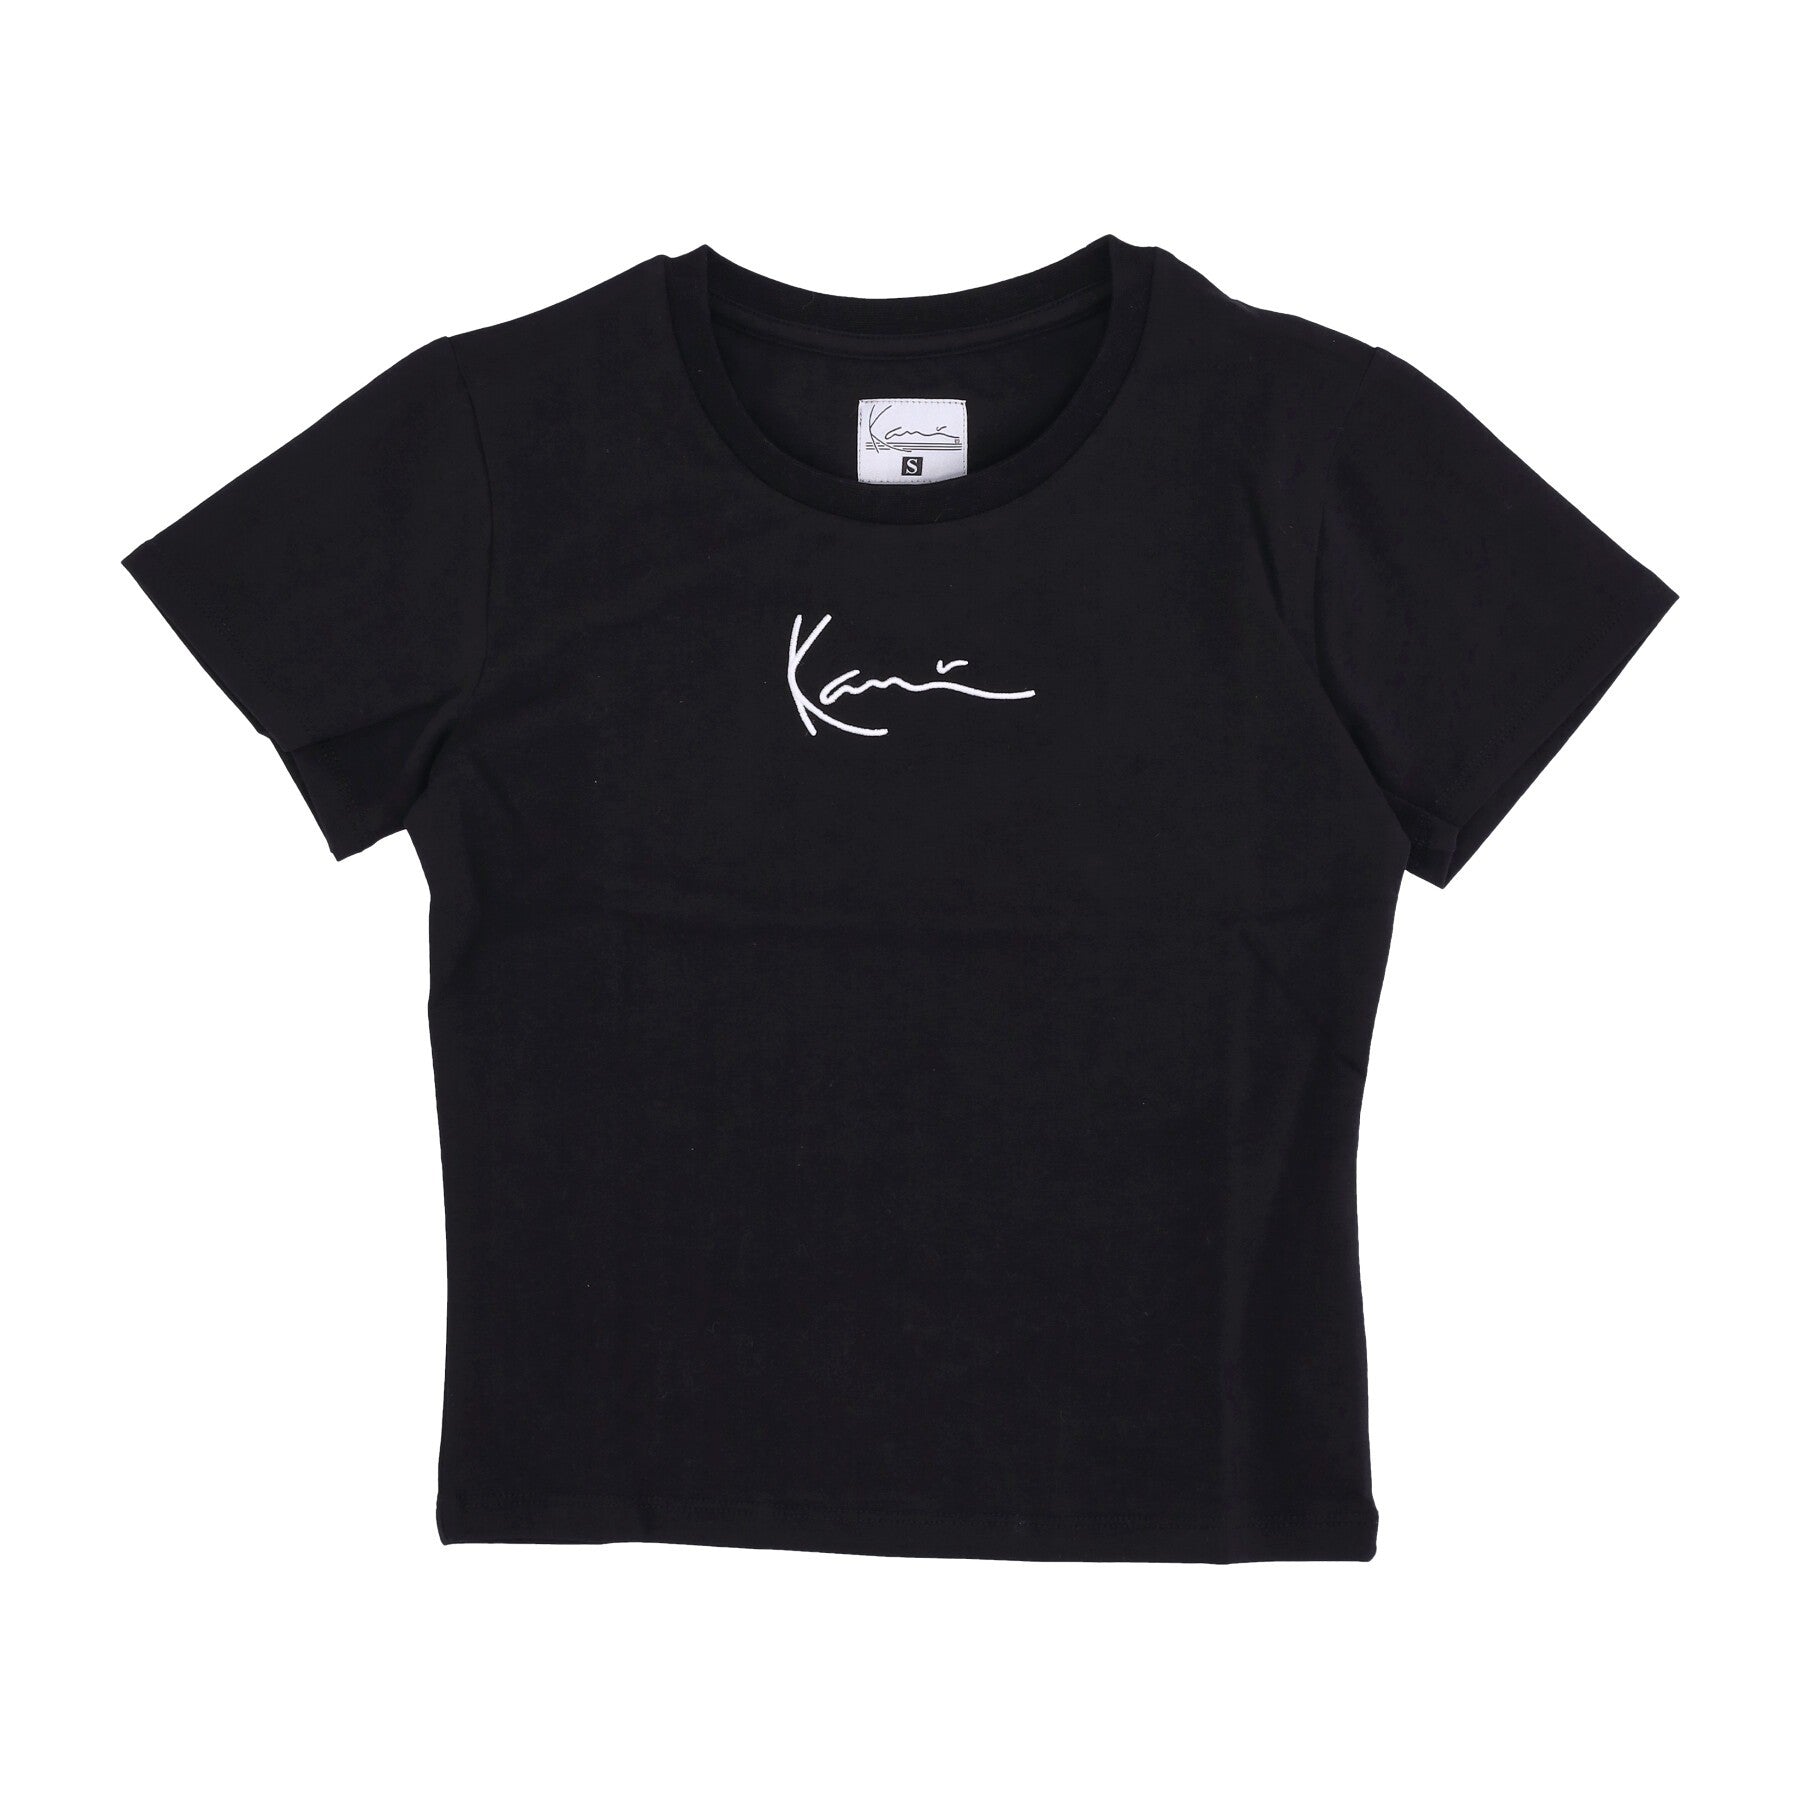 Women's Small Signature Short Tee Black T-Shirt